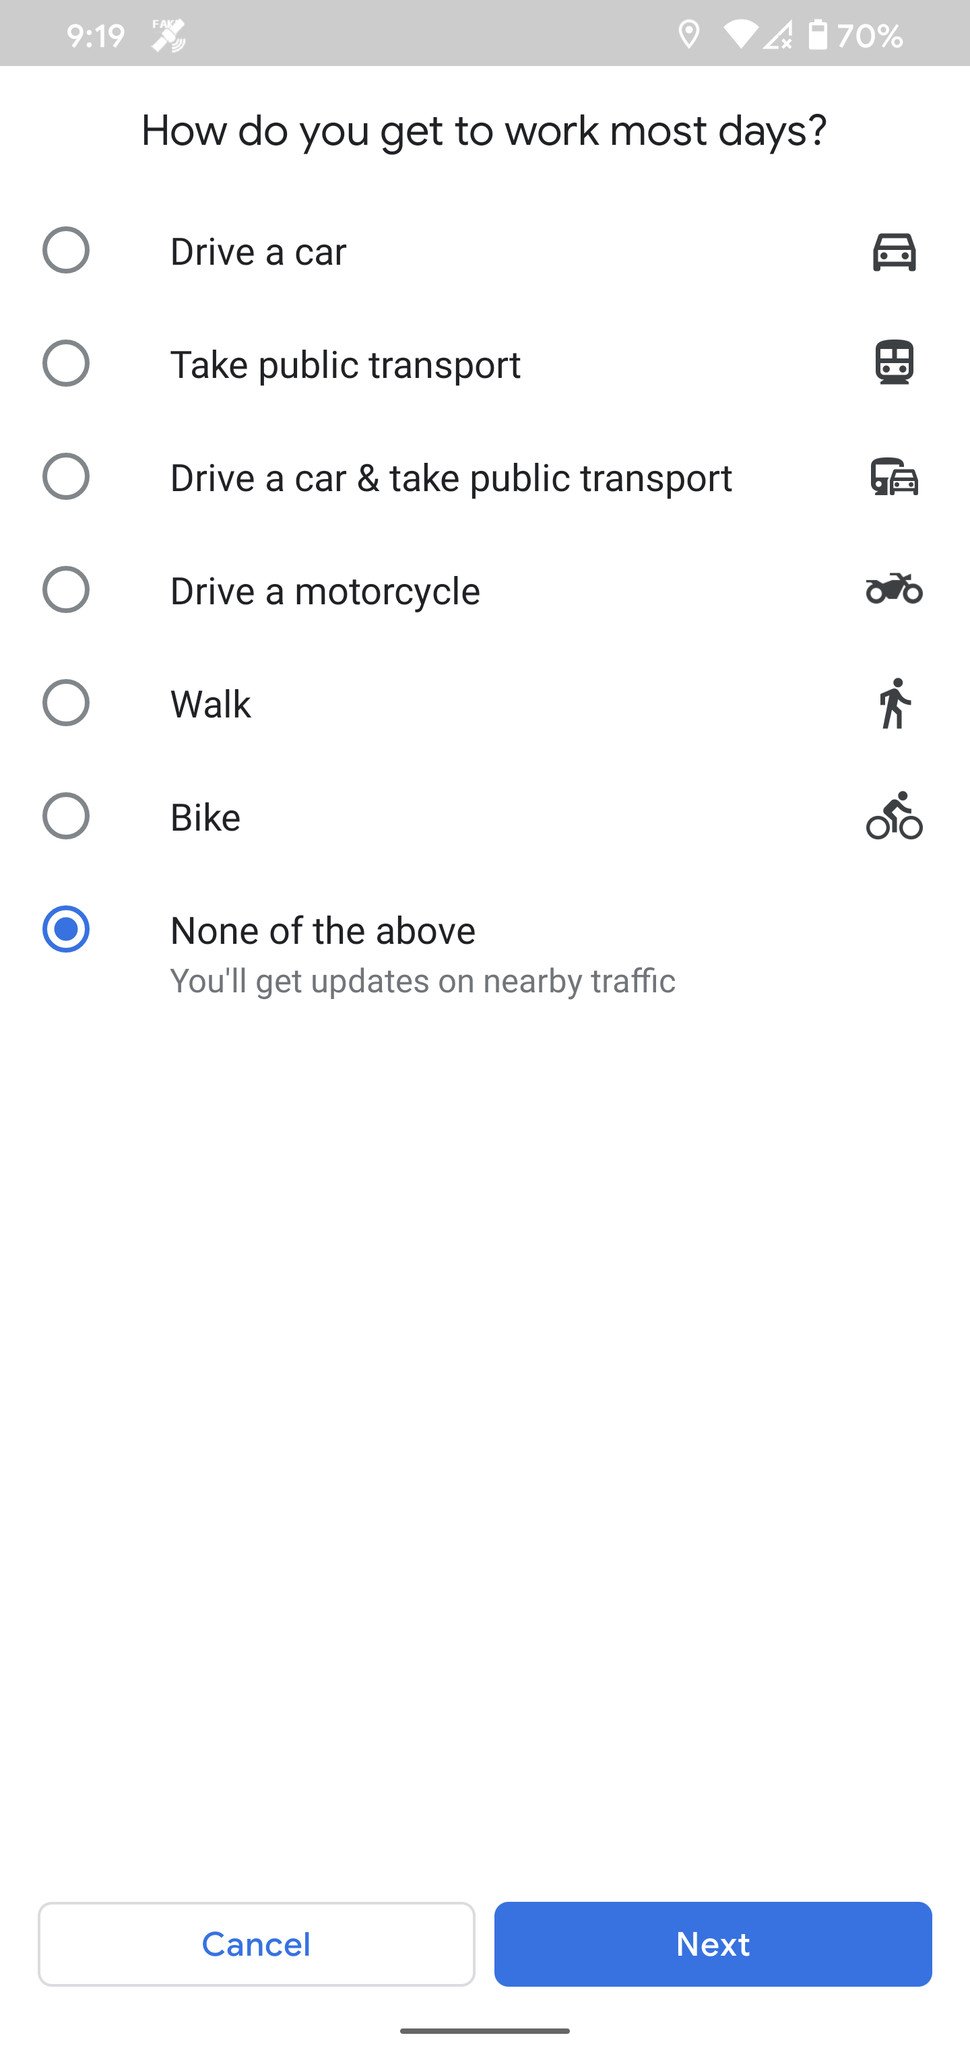 Google Maps Commute